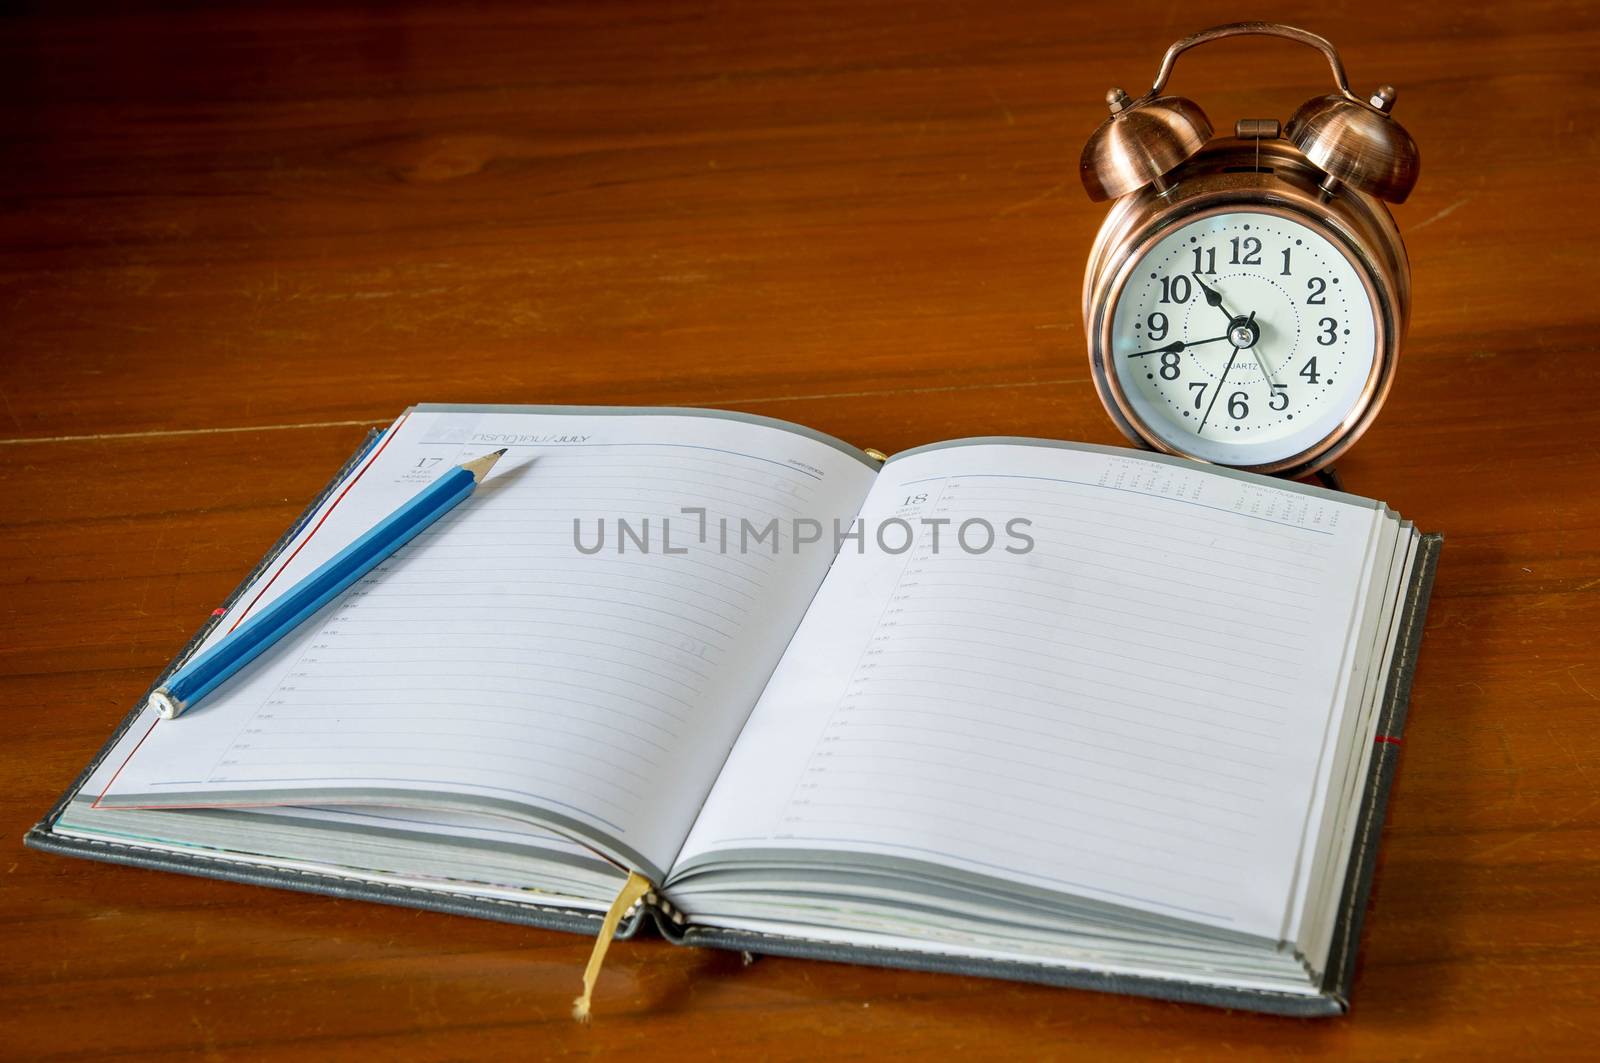 retro alarrm clock and notebook.